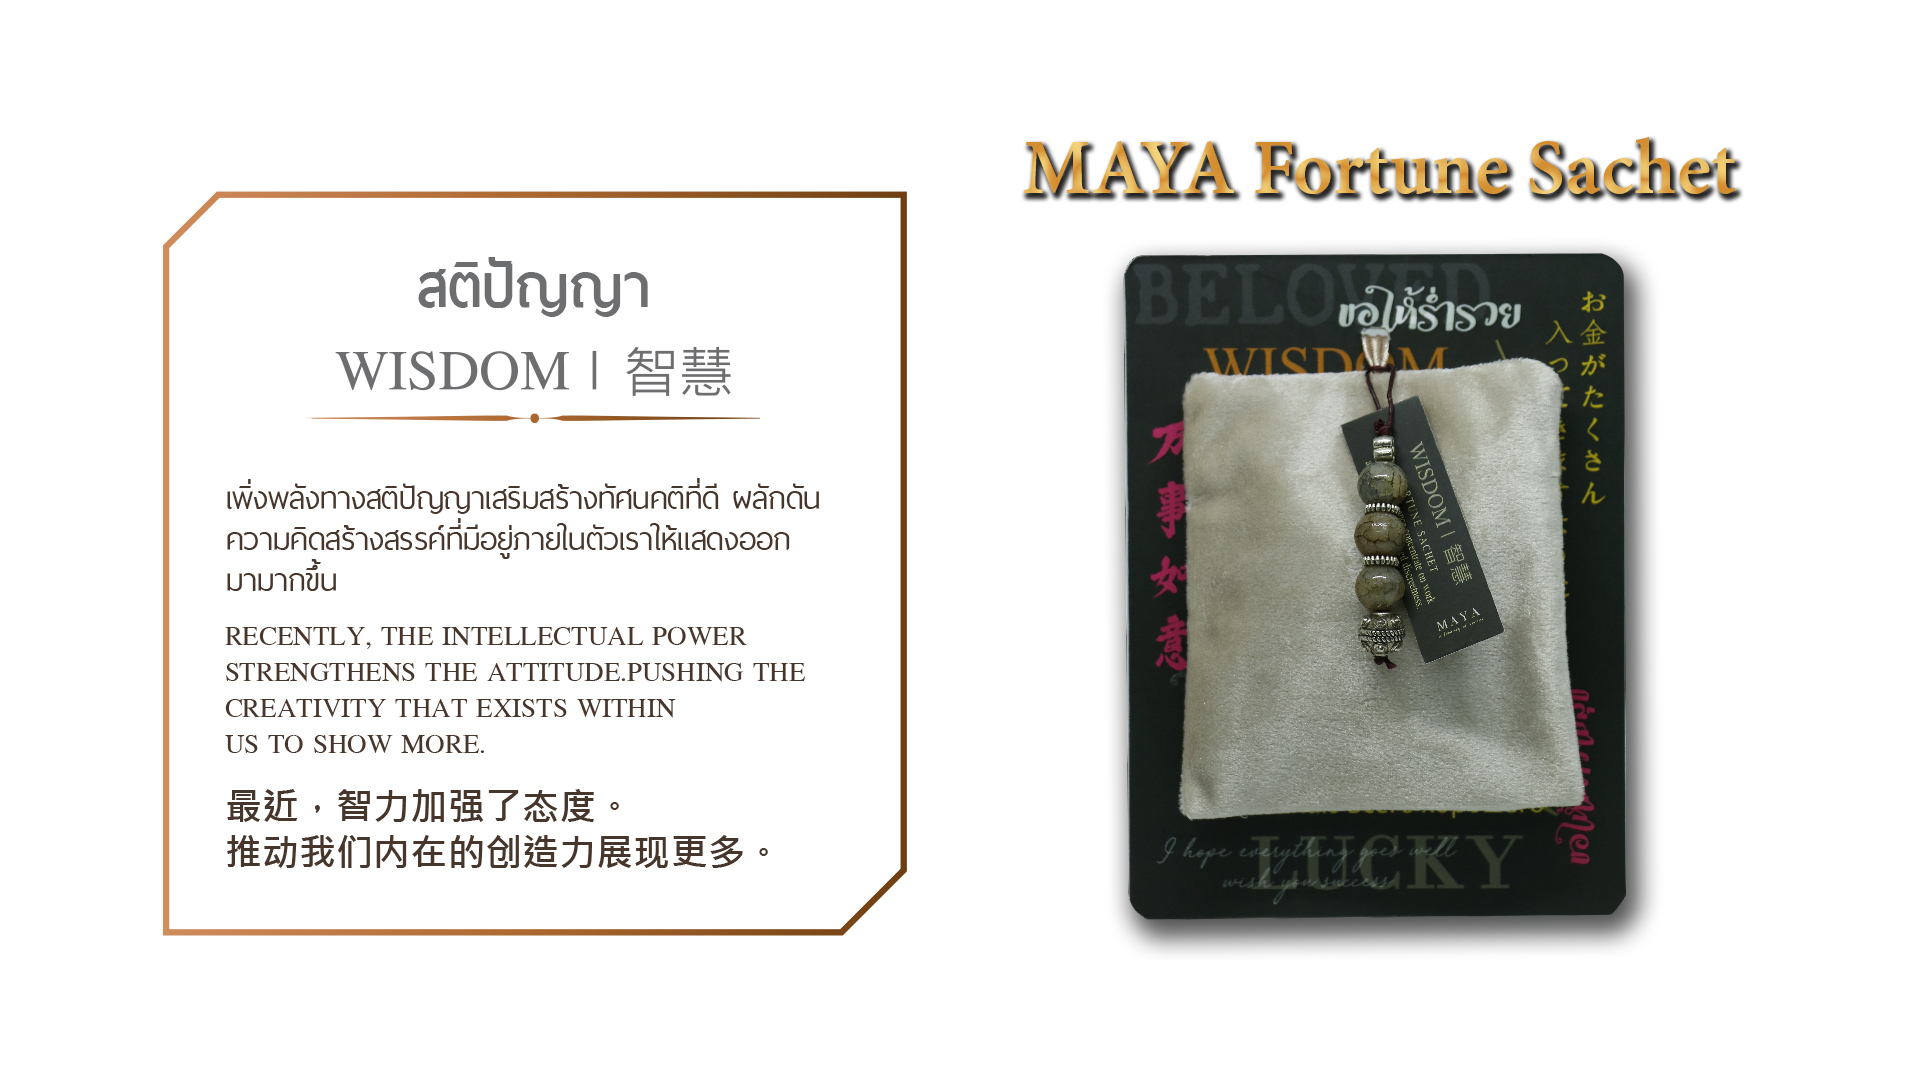 MAYA Fortune Sachet "สติปัญญา" (Thai Spa)